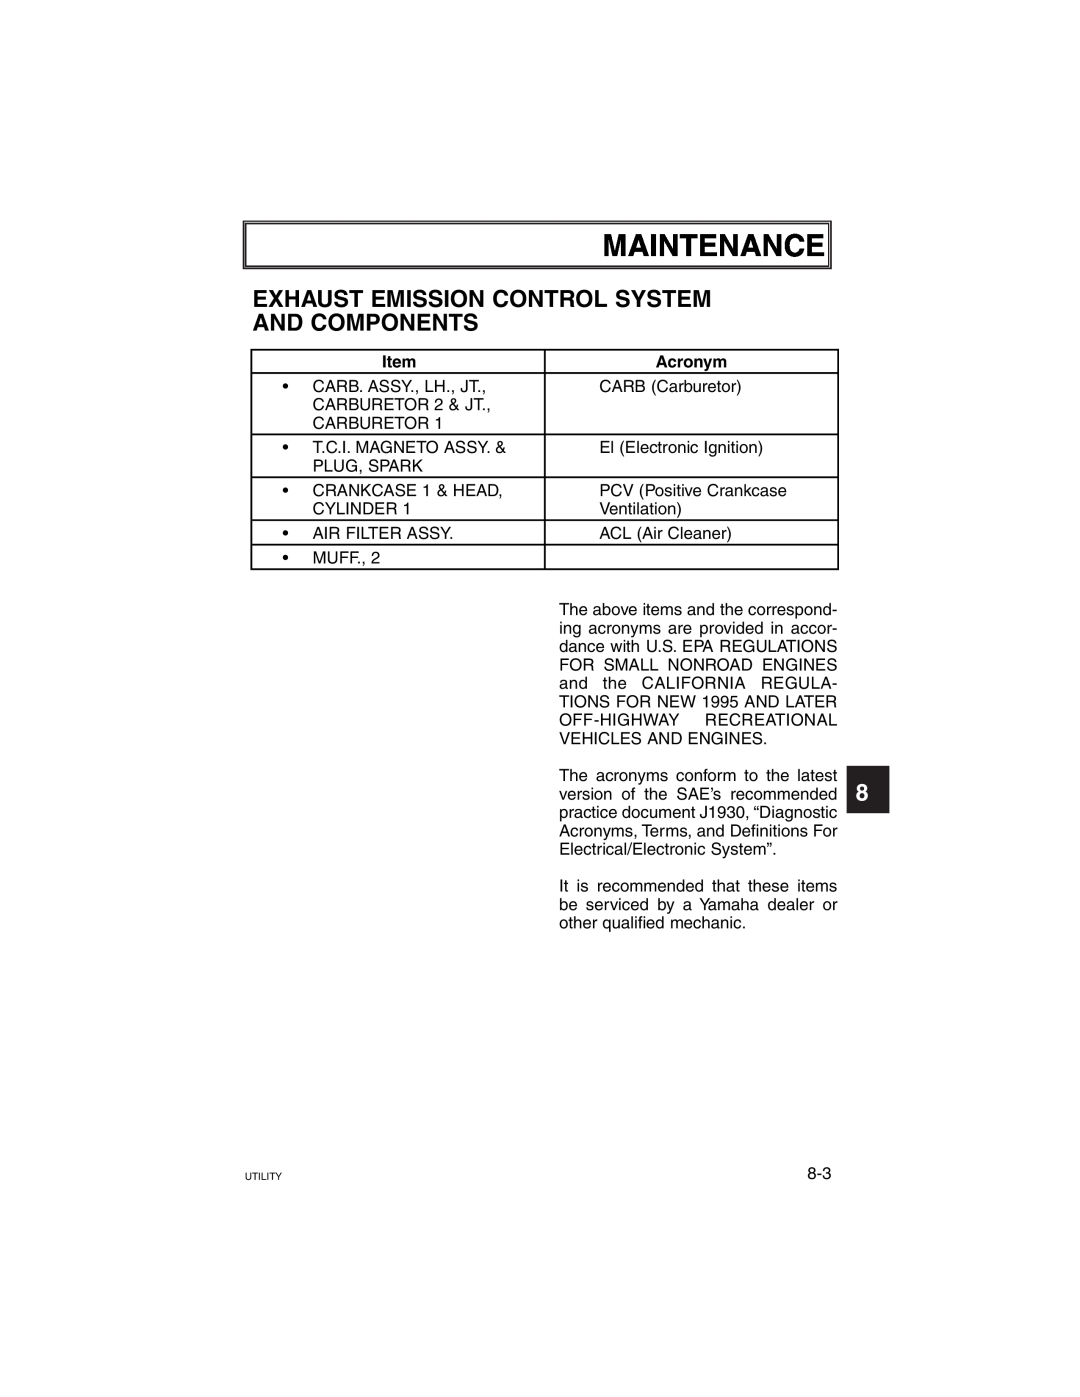 Yamaha G21A manual Maintenance, Acronym 